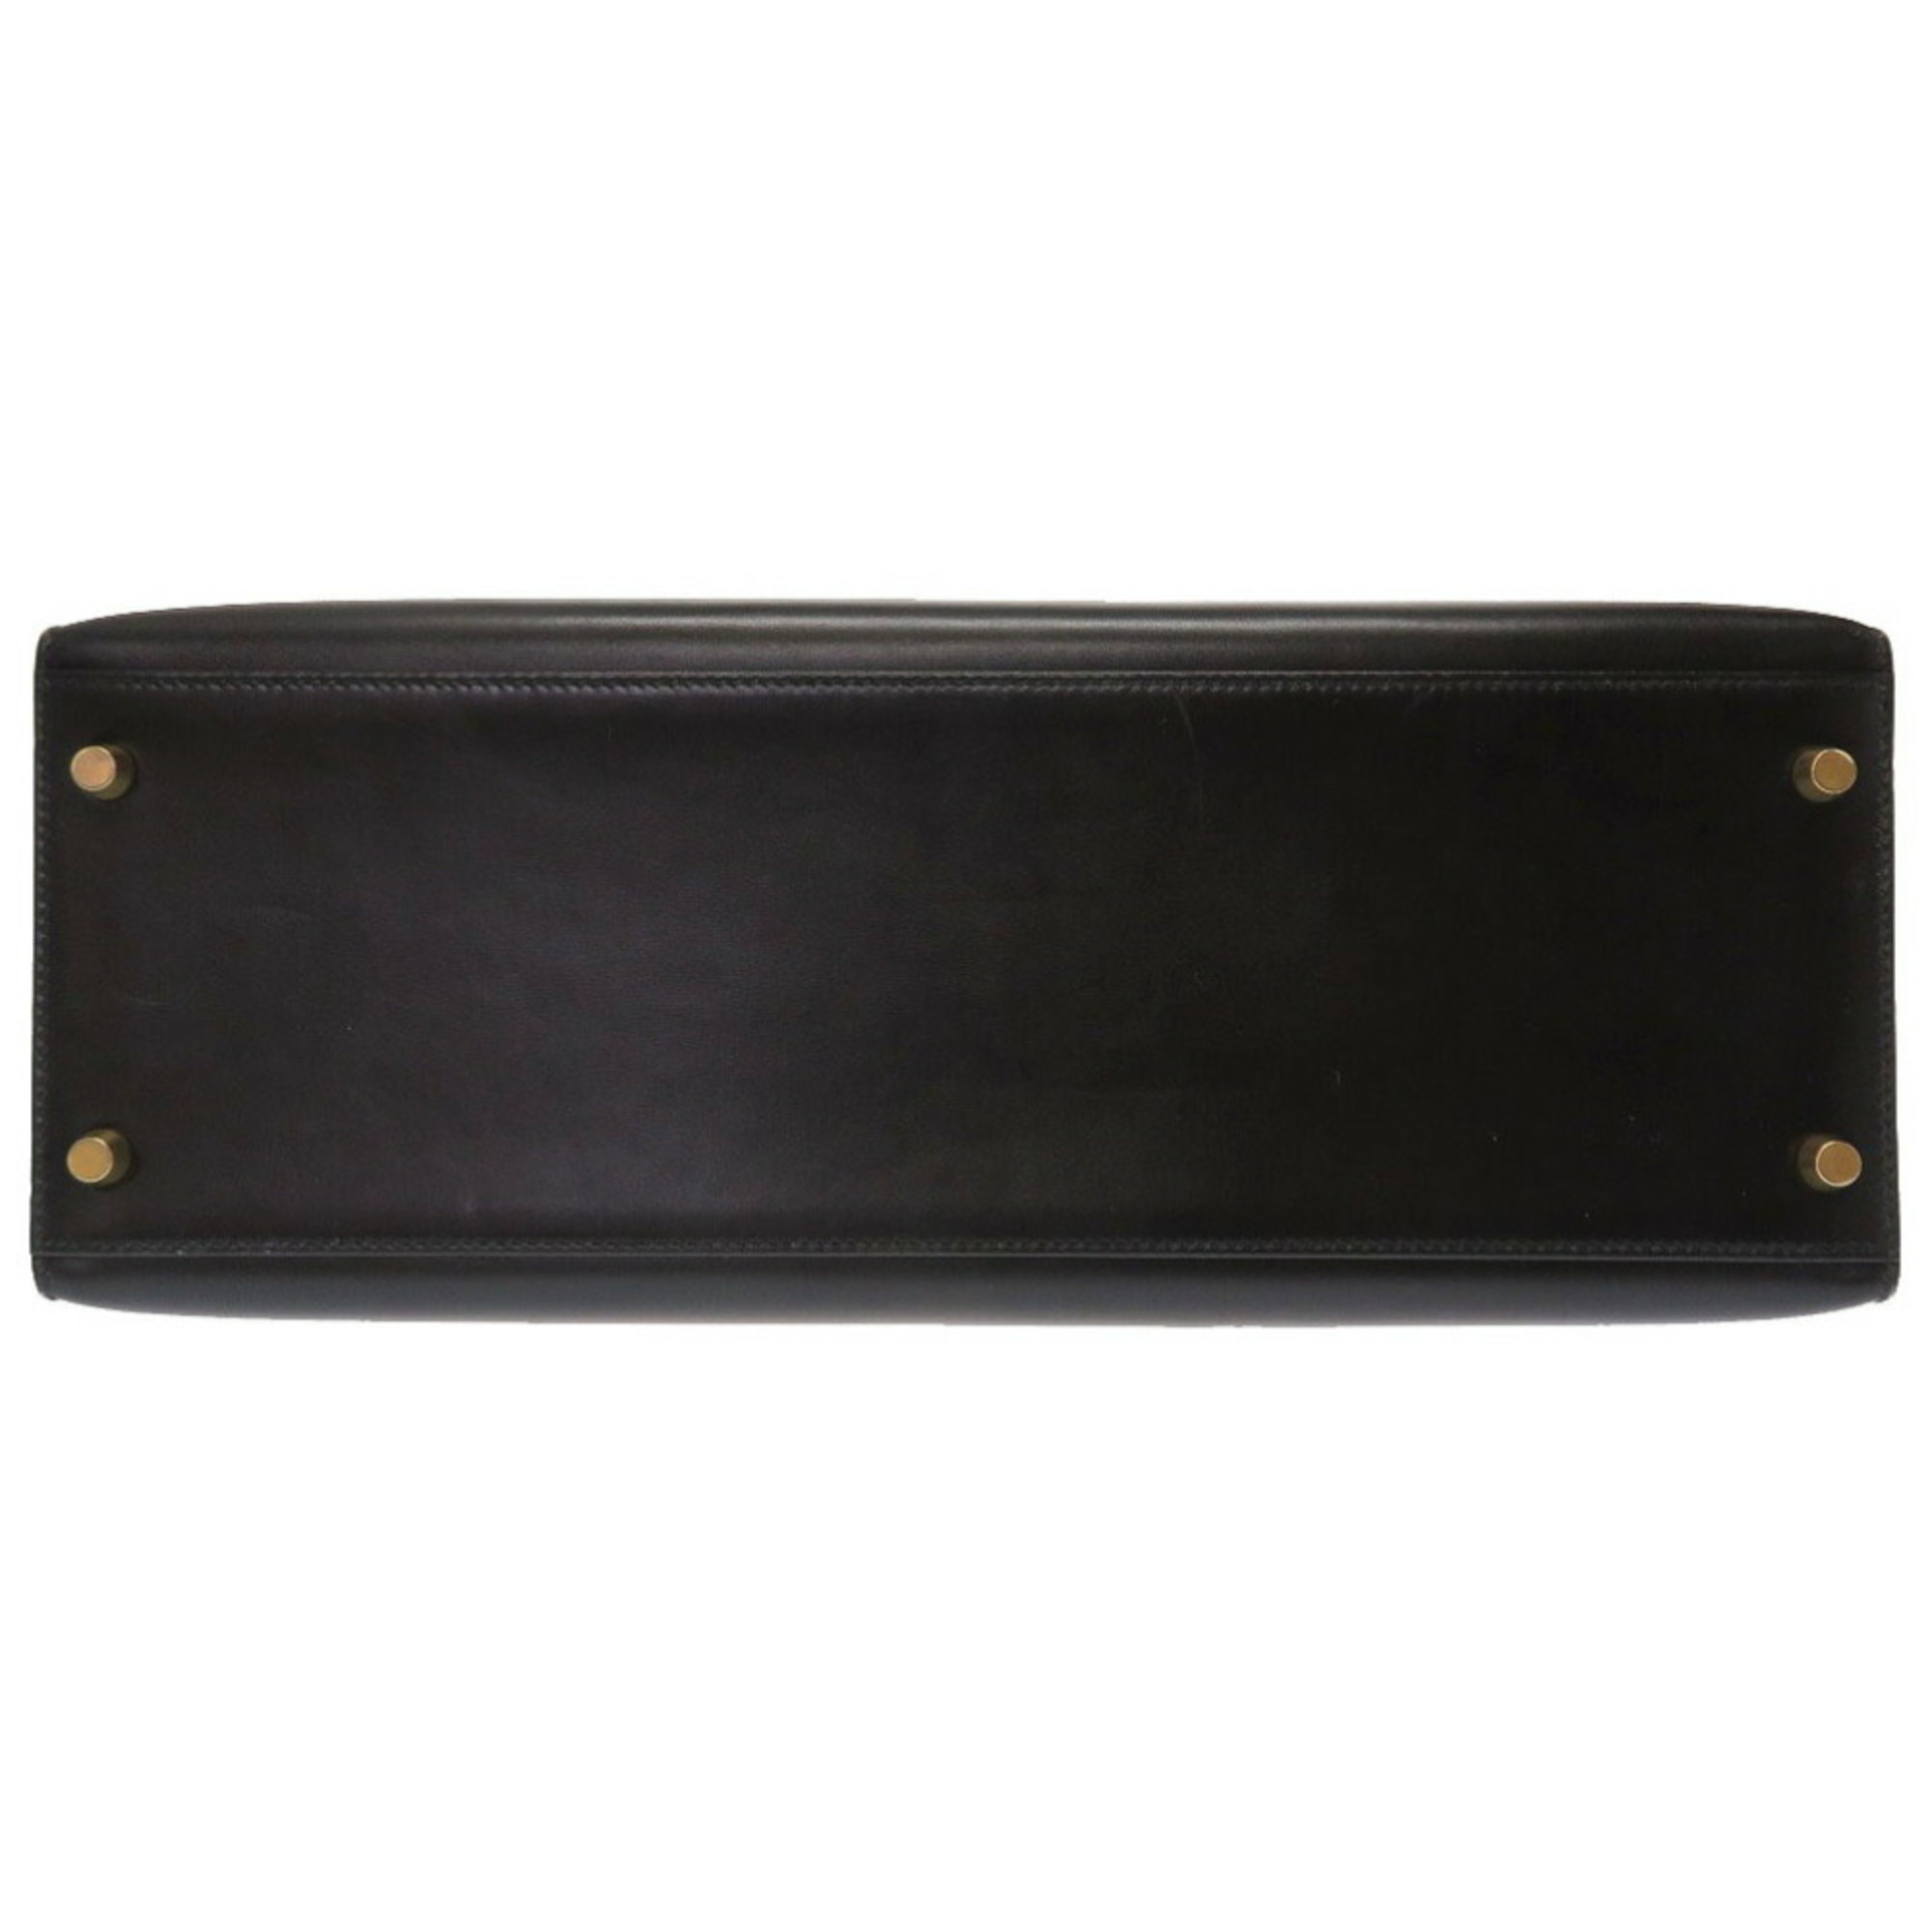 Hermes Piano Kelly 35 Box calf Black 〇X engraved Handbag Bag 0042 HERMES